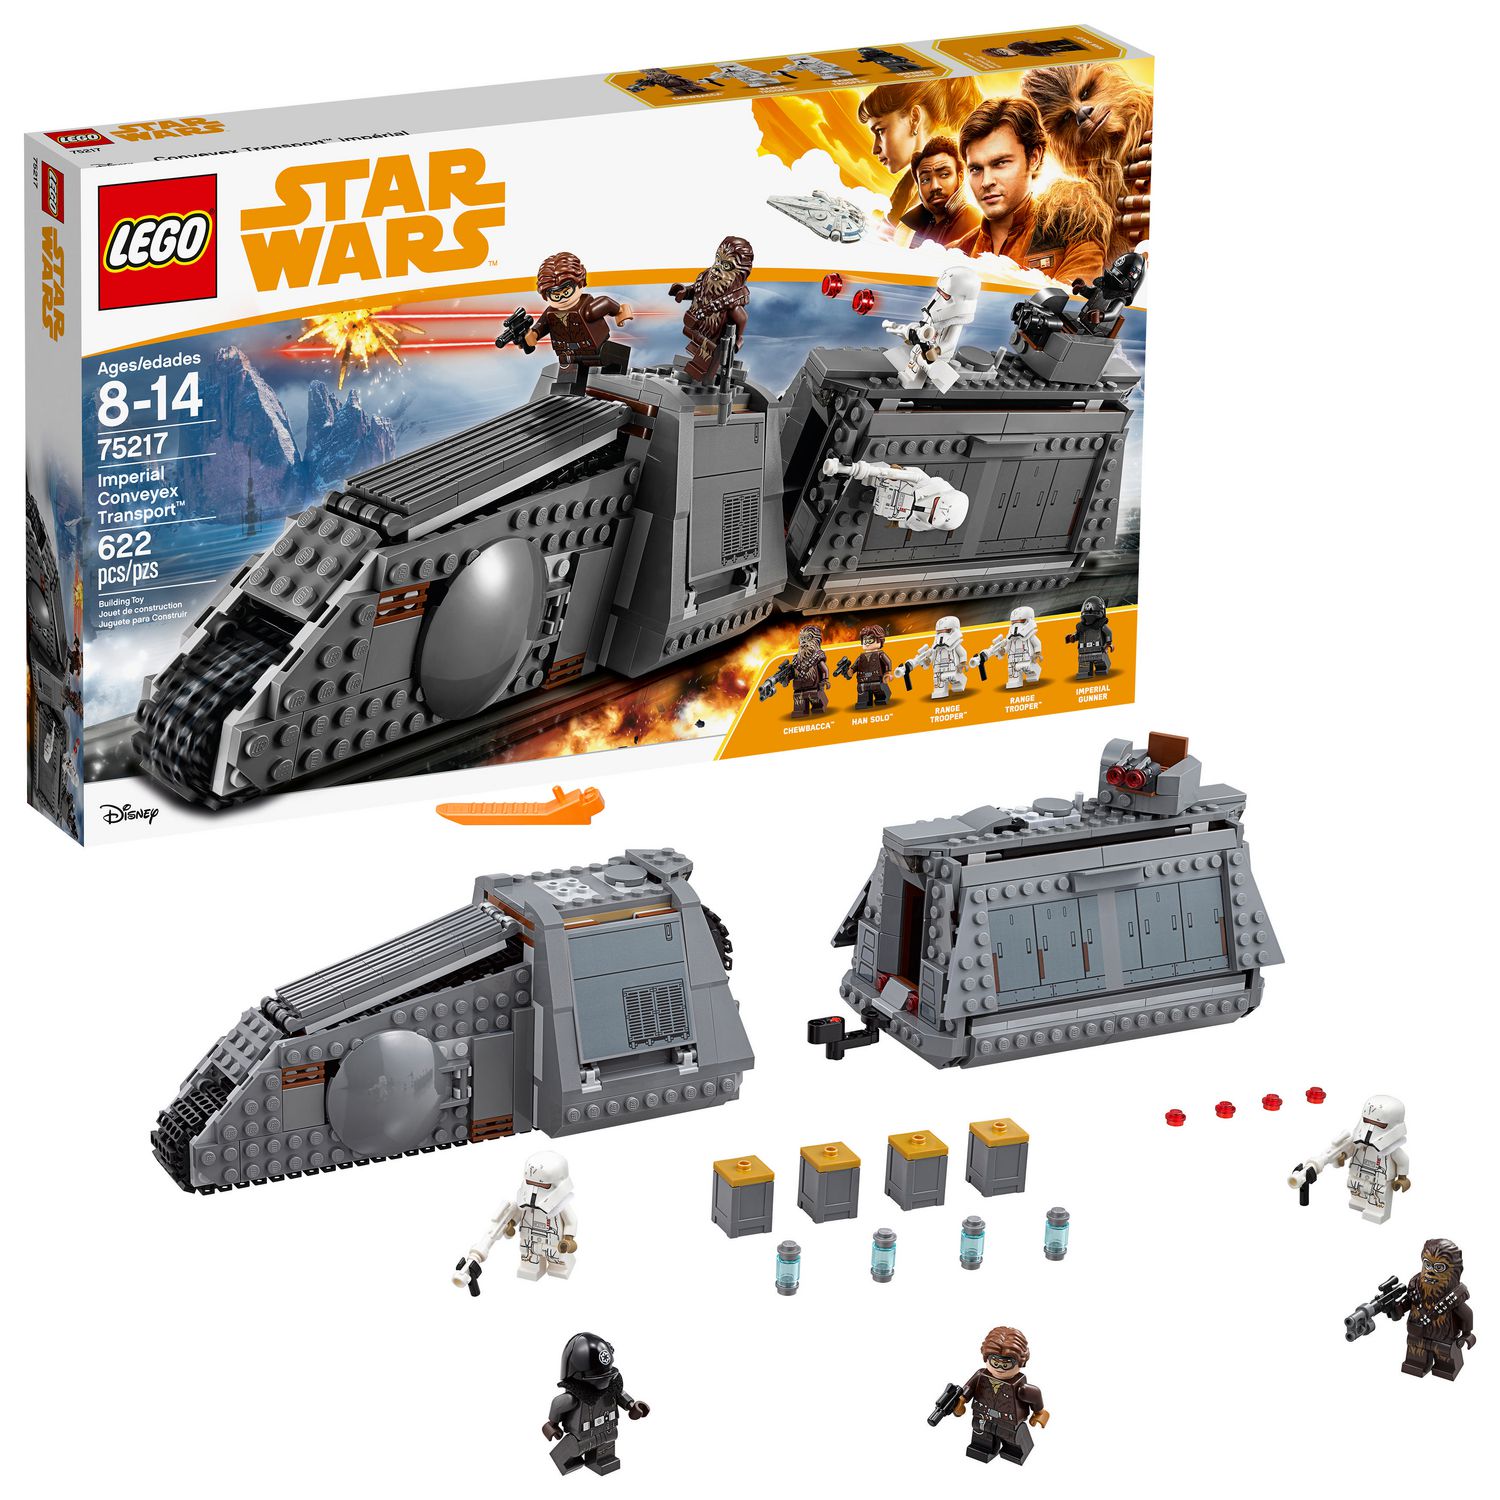 LEGO Star Wars Imperial Conveyex Transport 75217 Toy Building Kit 